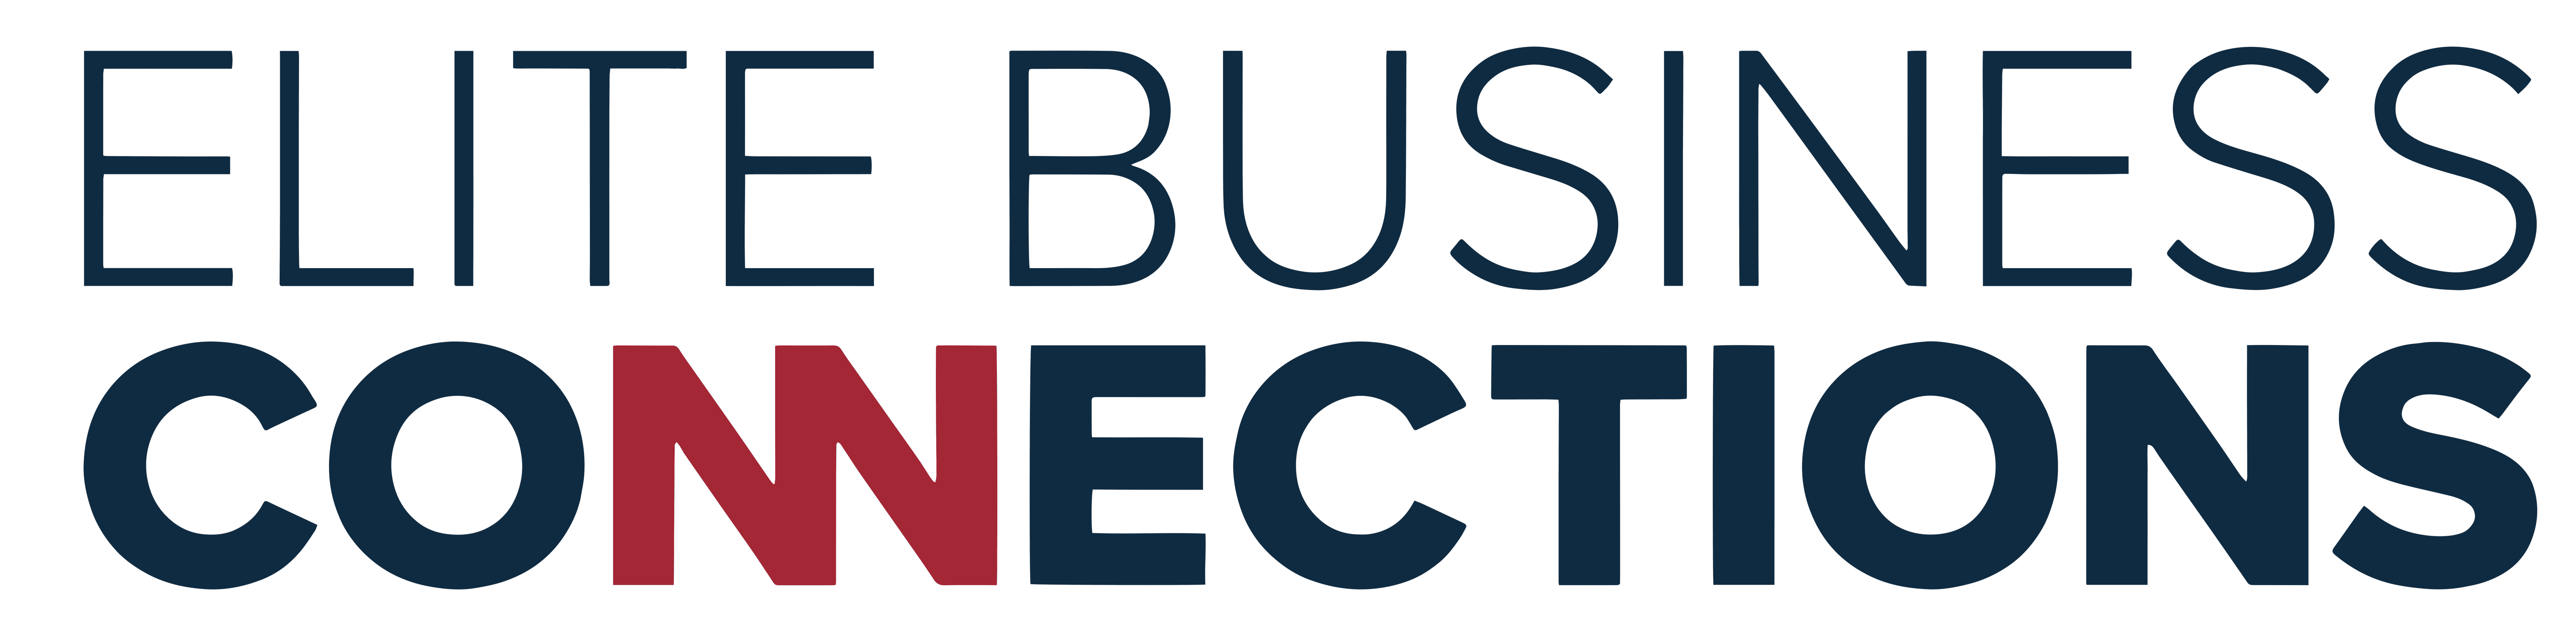 elite business connections logo